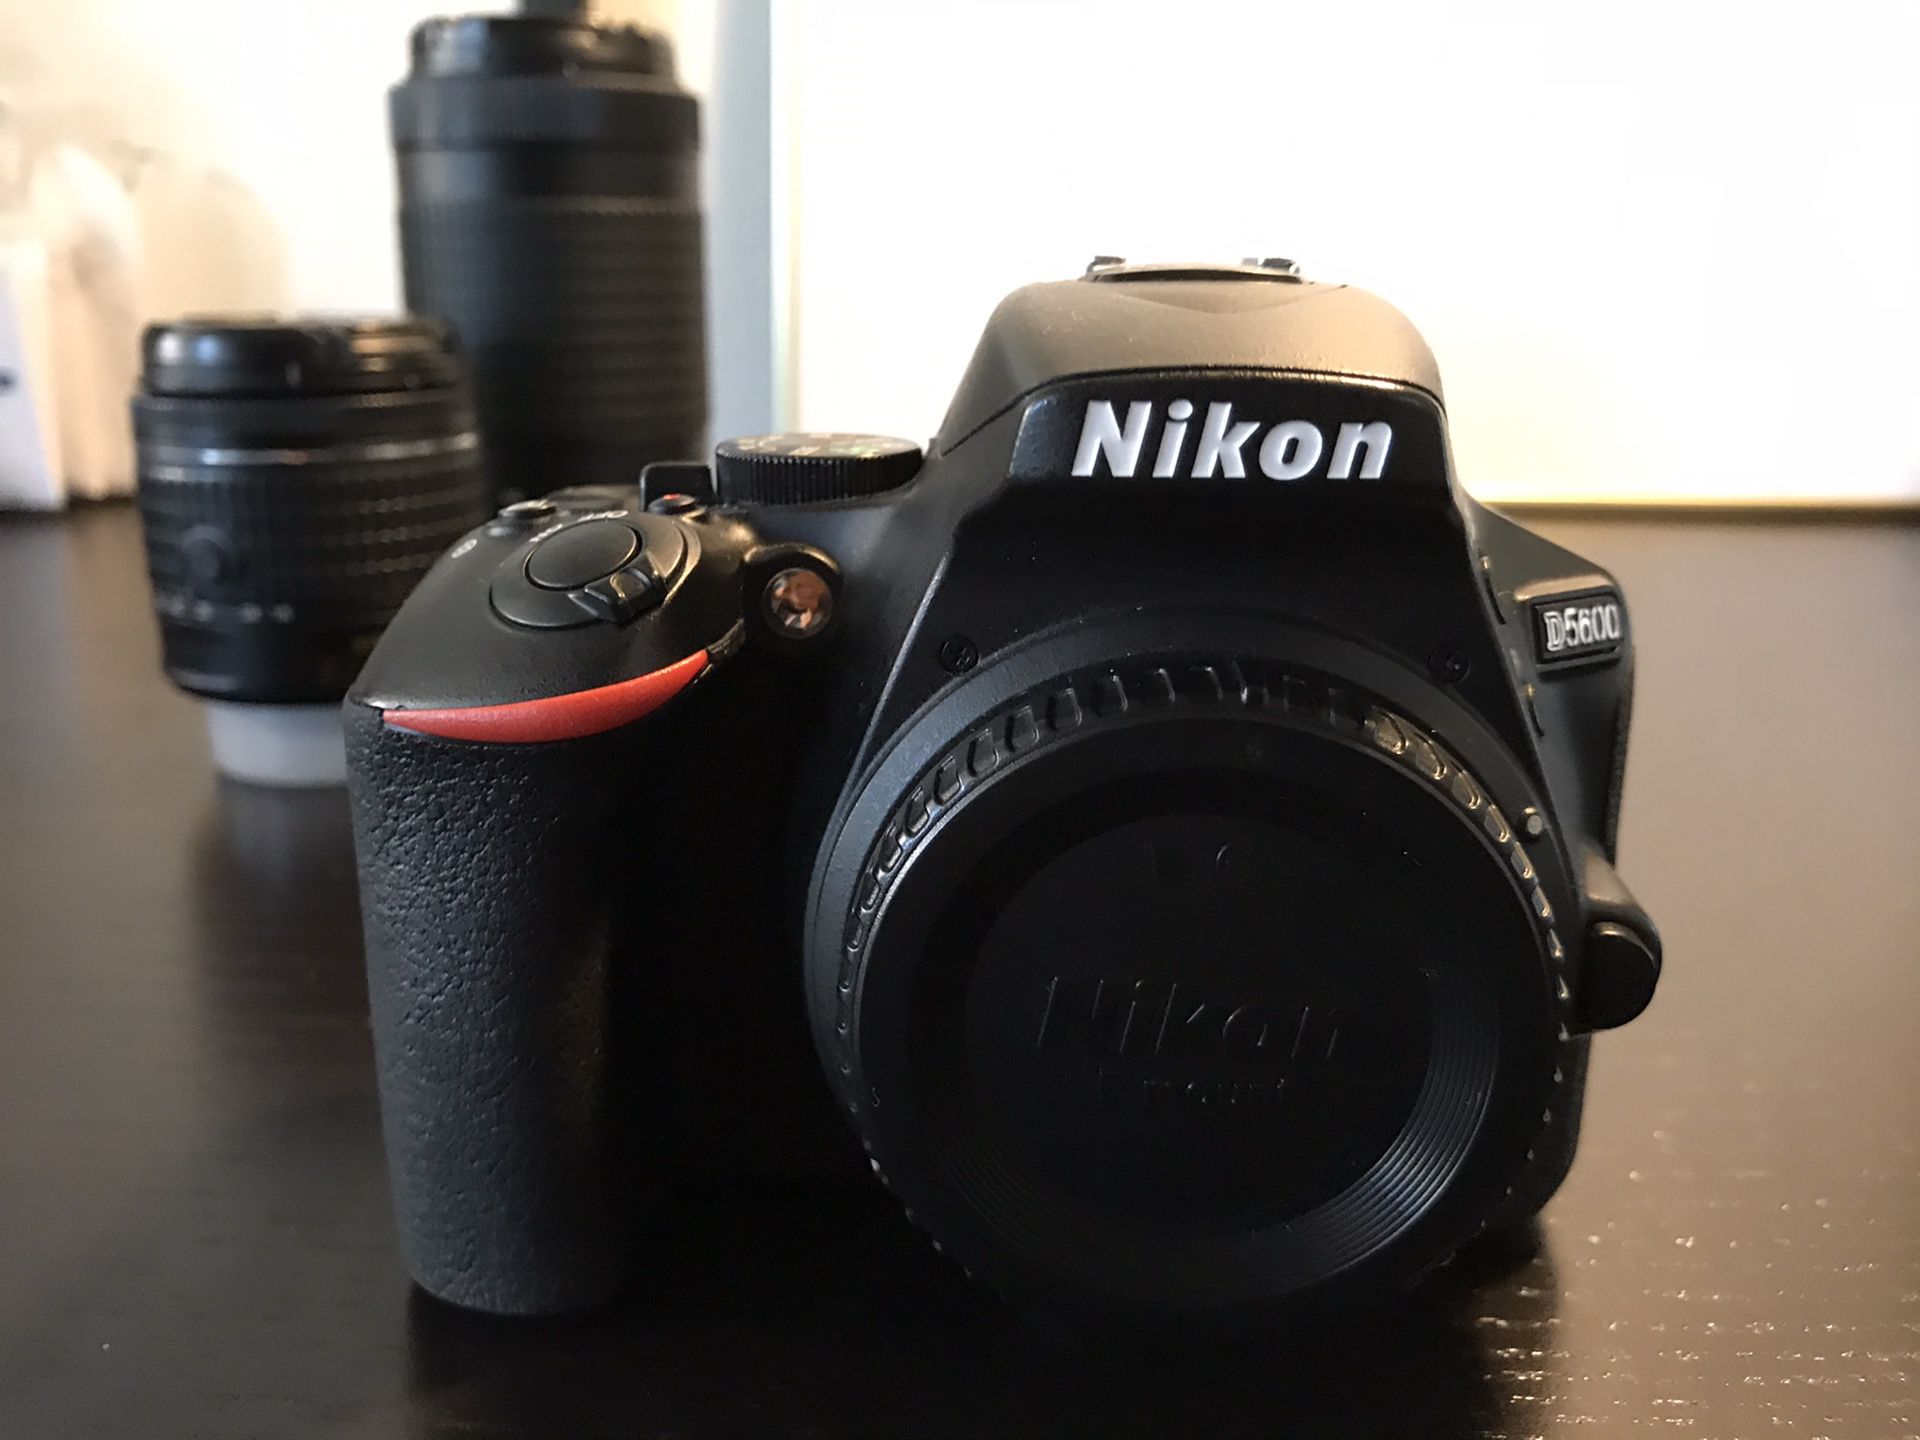 Nikon - D5600 DSLR Two Lens Kit with 18-55mm and 70-300mm Lenses - Black